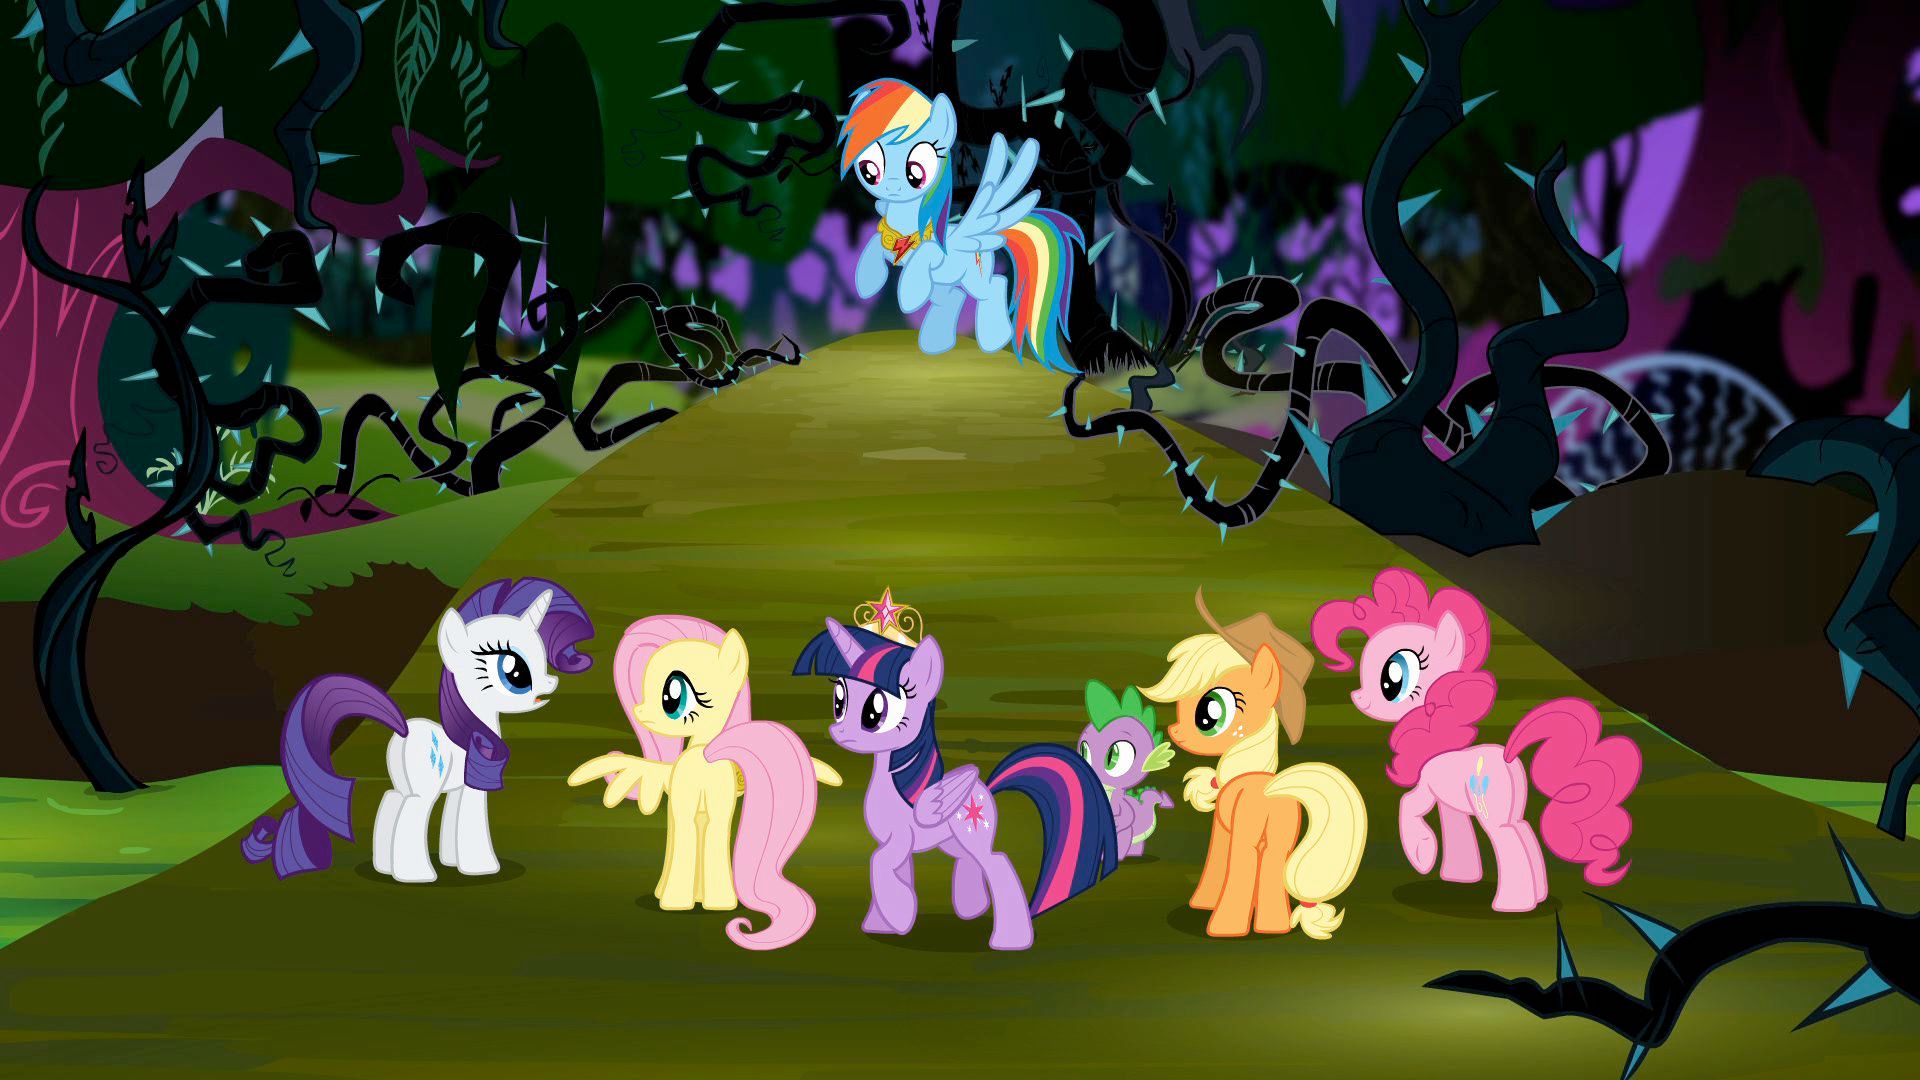 my little pony friendship is magic princess twilight sparkle part 2